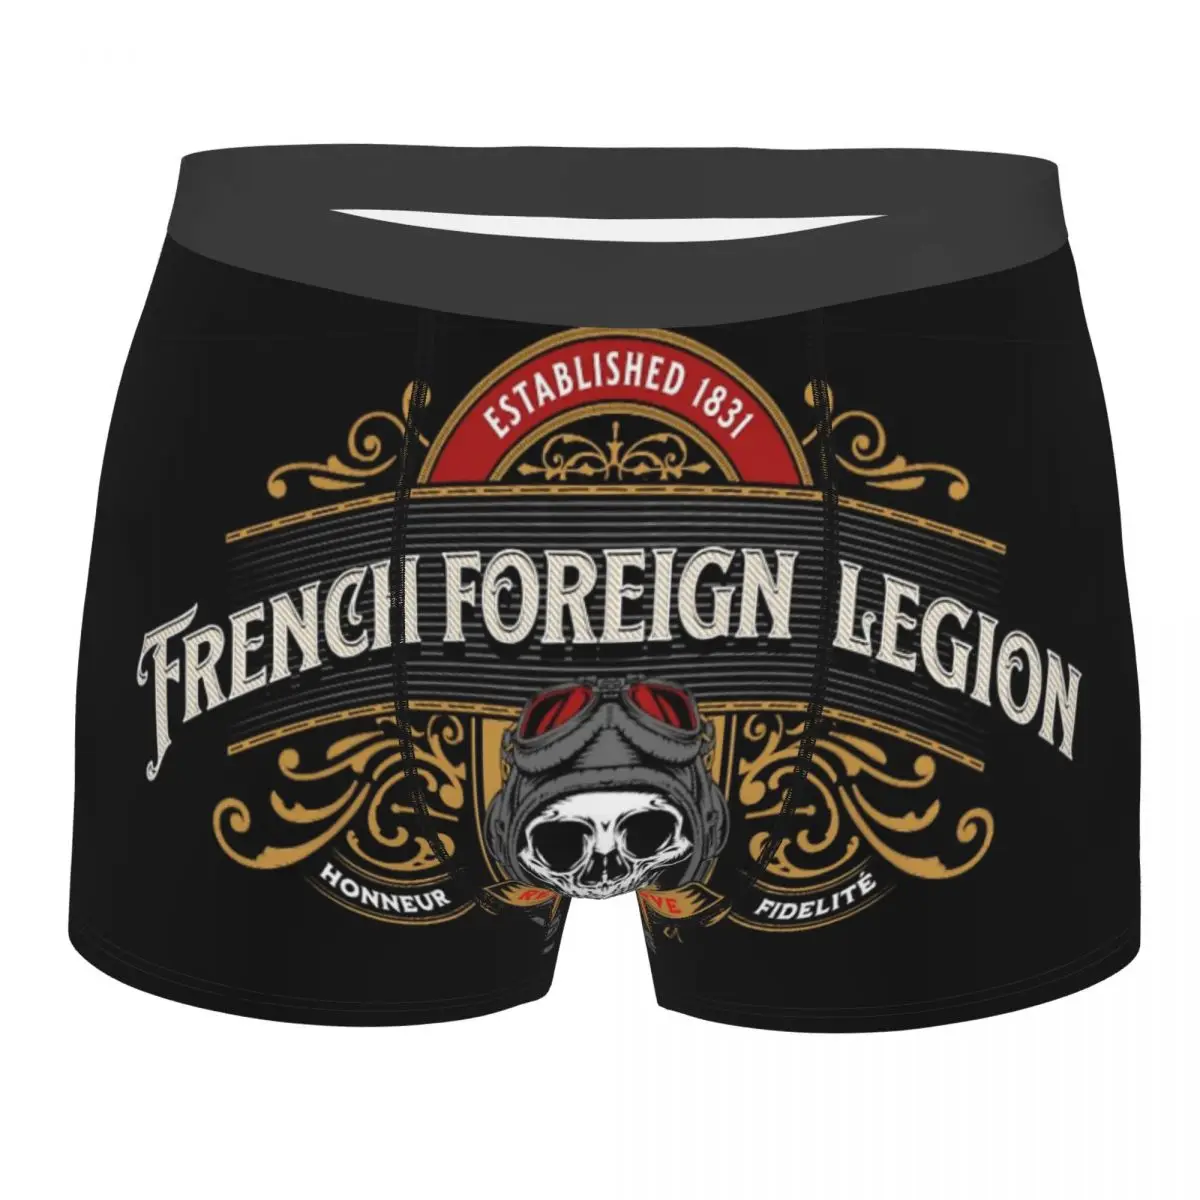 Spanish Legion Men Boxer Briefs Underwear Highly Breathable Top Quality Gift Idea